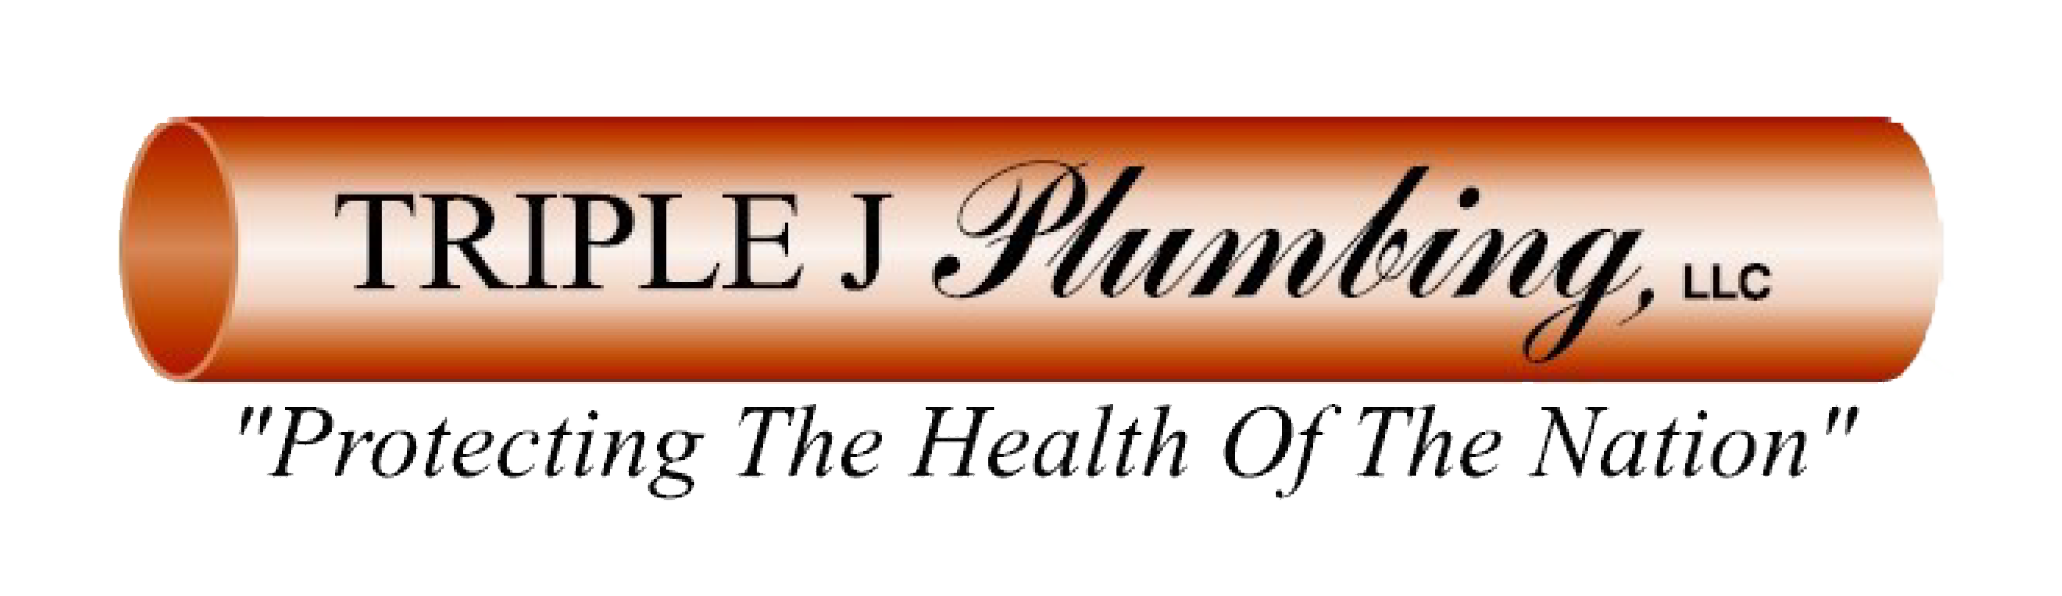 Triple J Plumbing, LLC